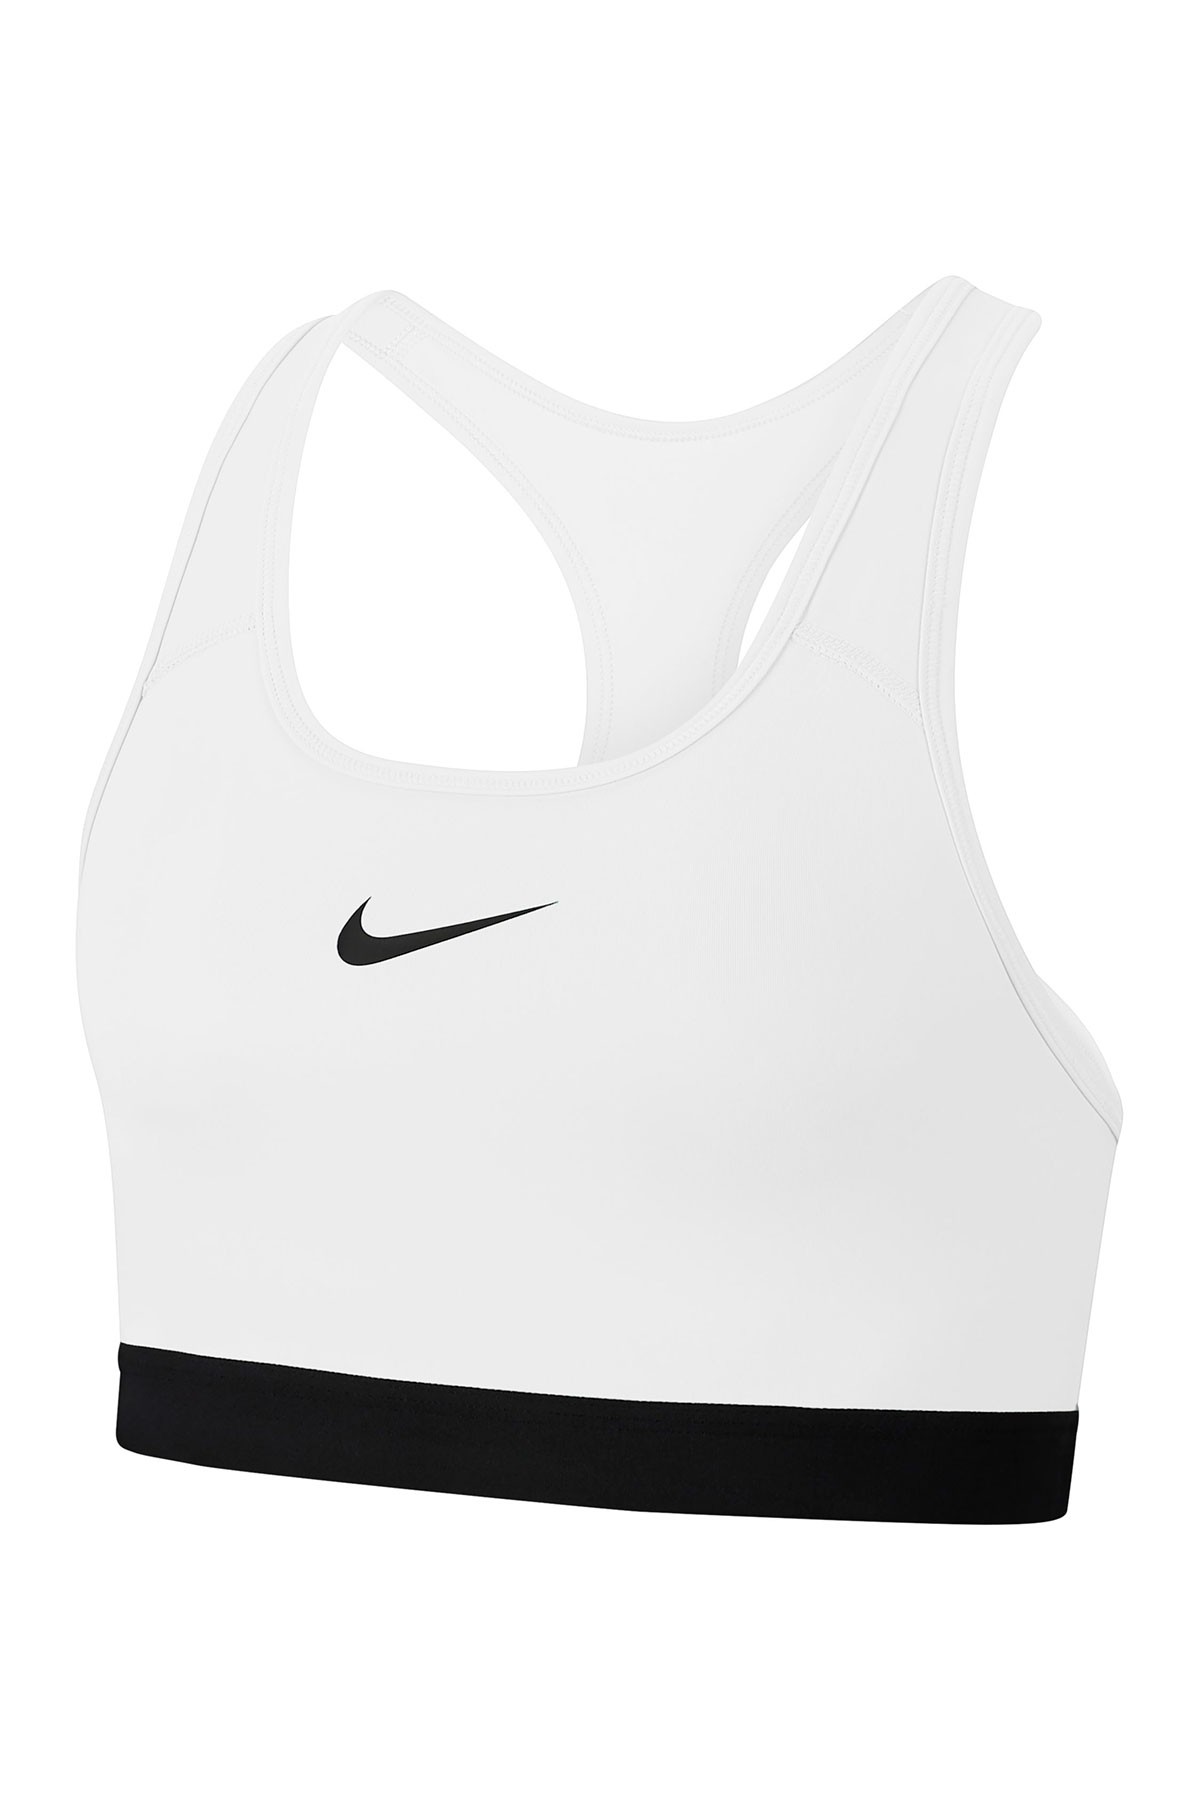 Nike Swoosh [M] Women's Medium-Support 1-Piece Padded Training Bra